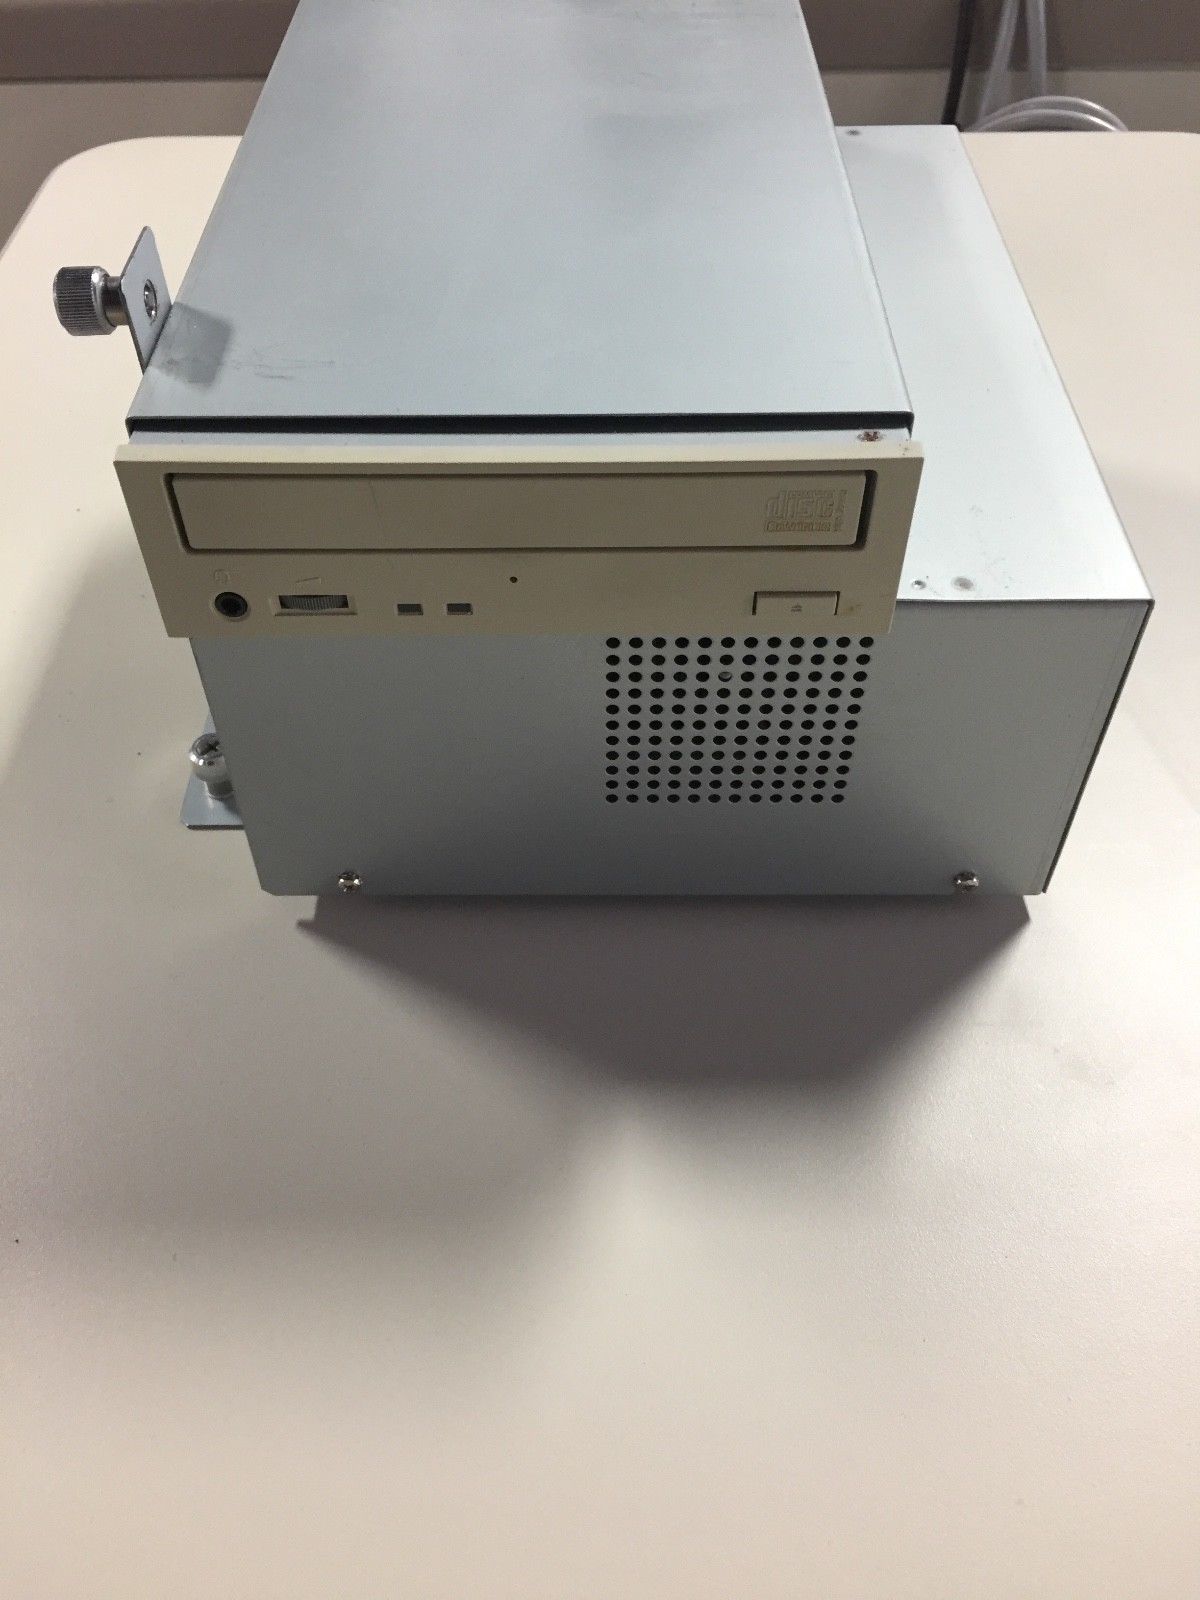 07852473 DIMAQ BOX FOR SIEMENS ACUSON CV70 ULTRASOUND DIAGNOSTIC ULTRASOUND MACHINES FOR SALE